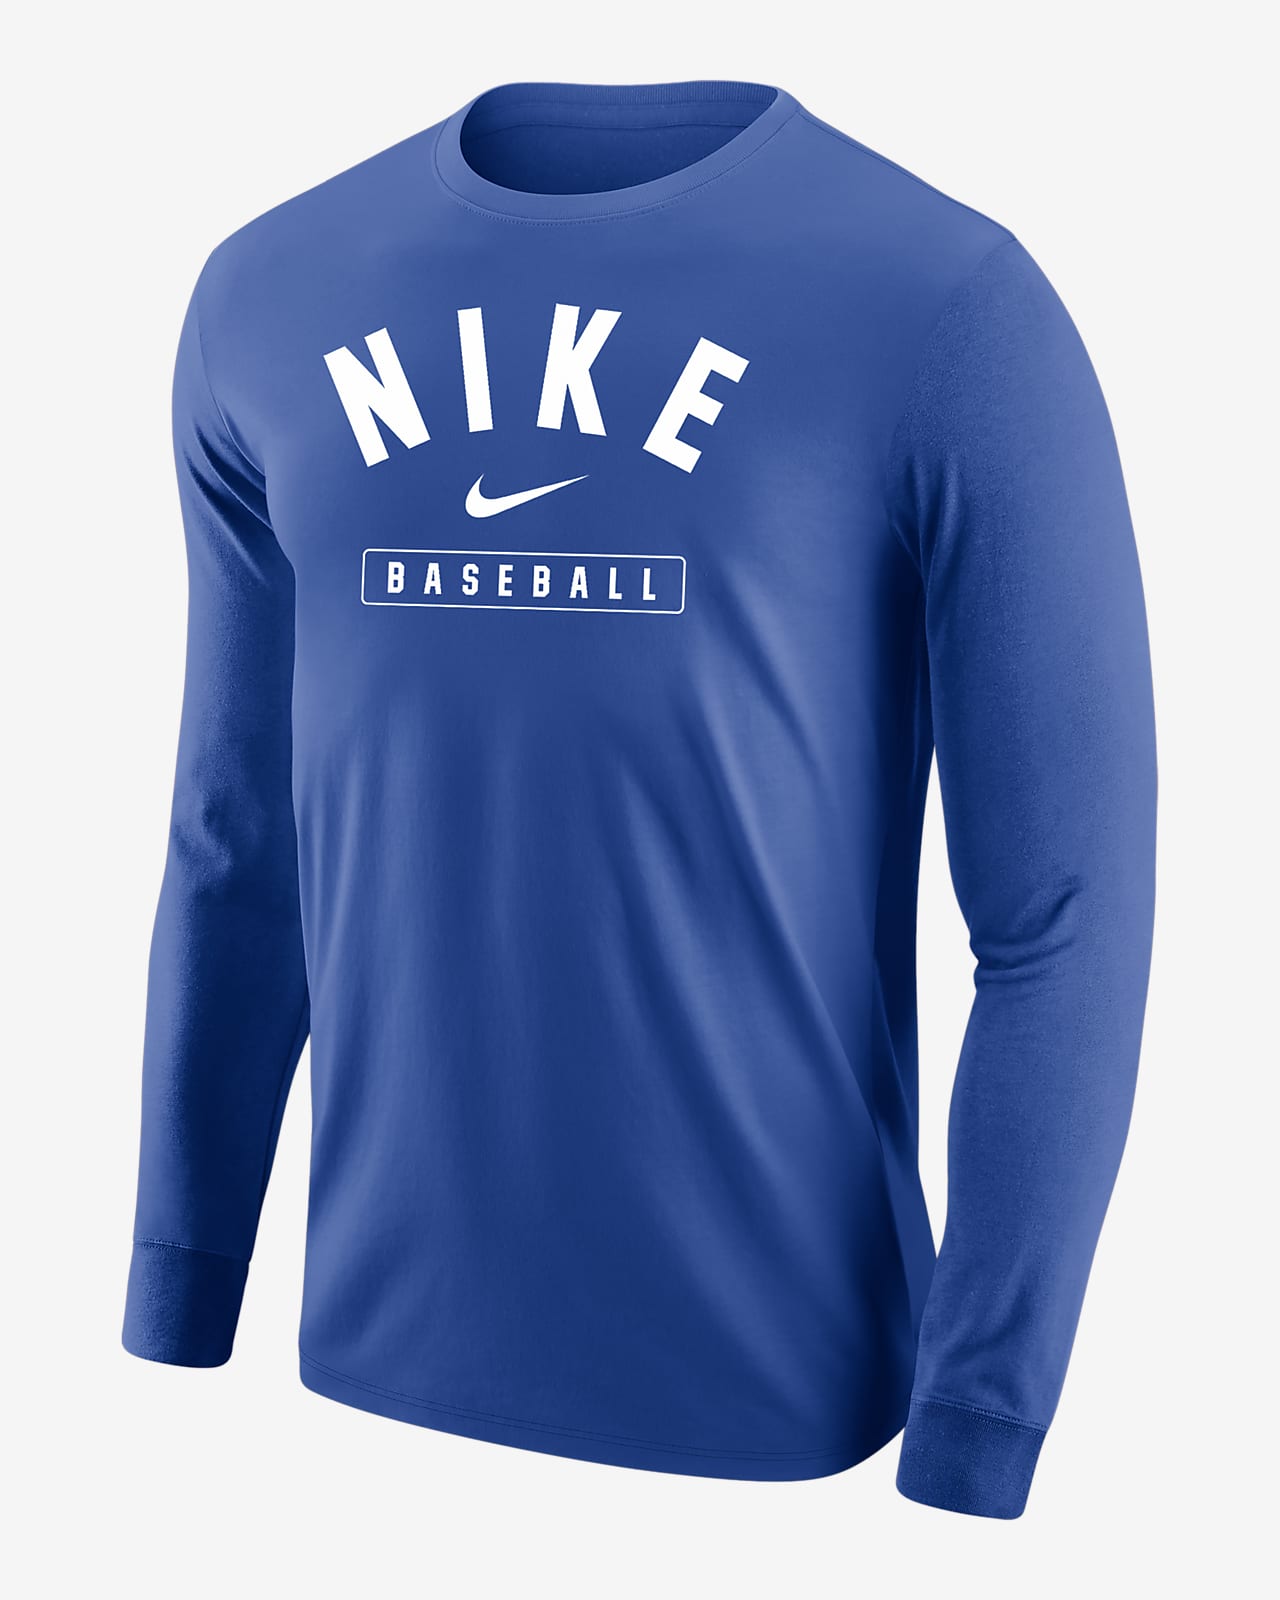 Nike Baseball Men's Long-Sleeve T-Shirt